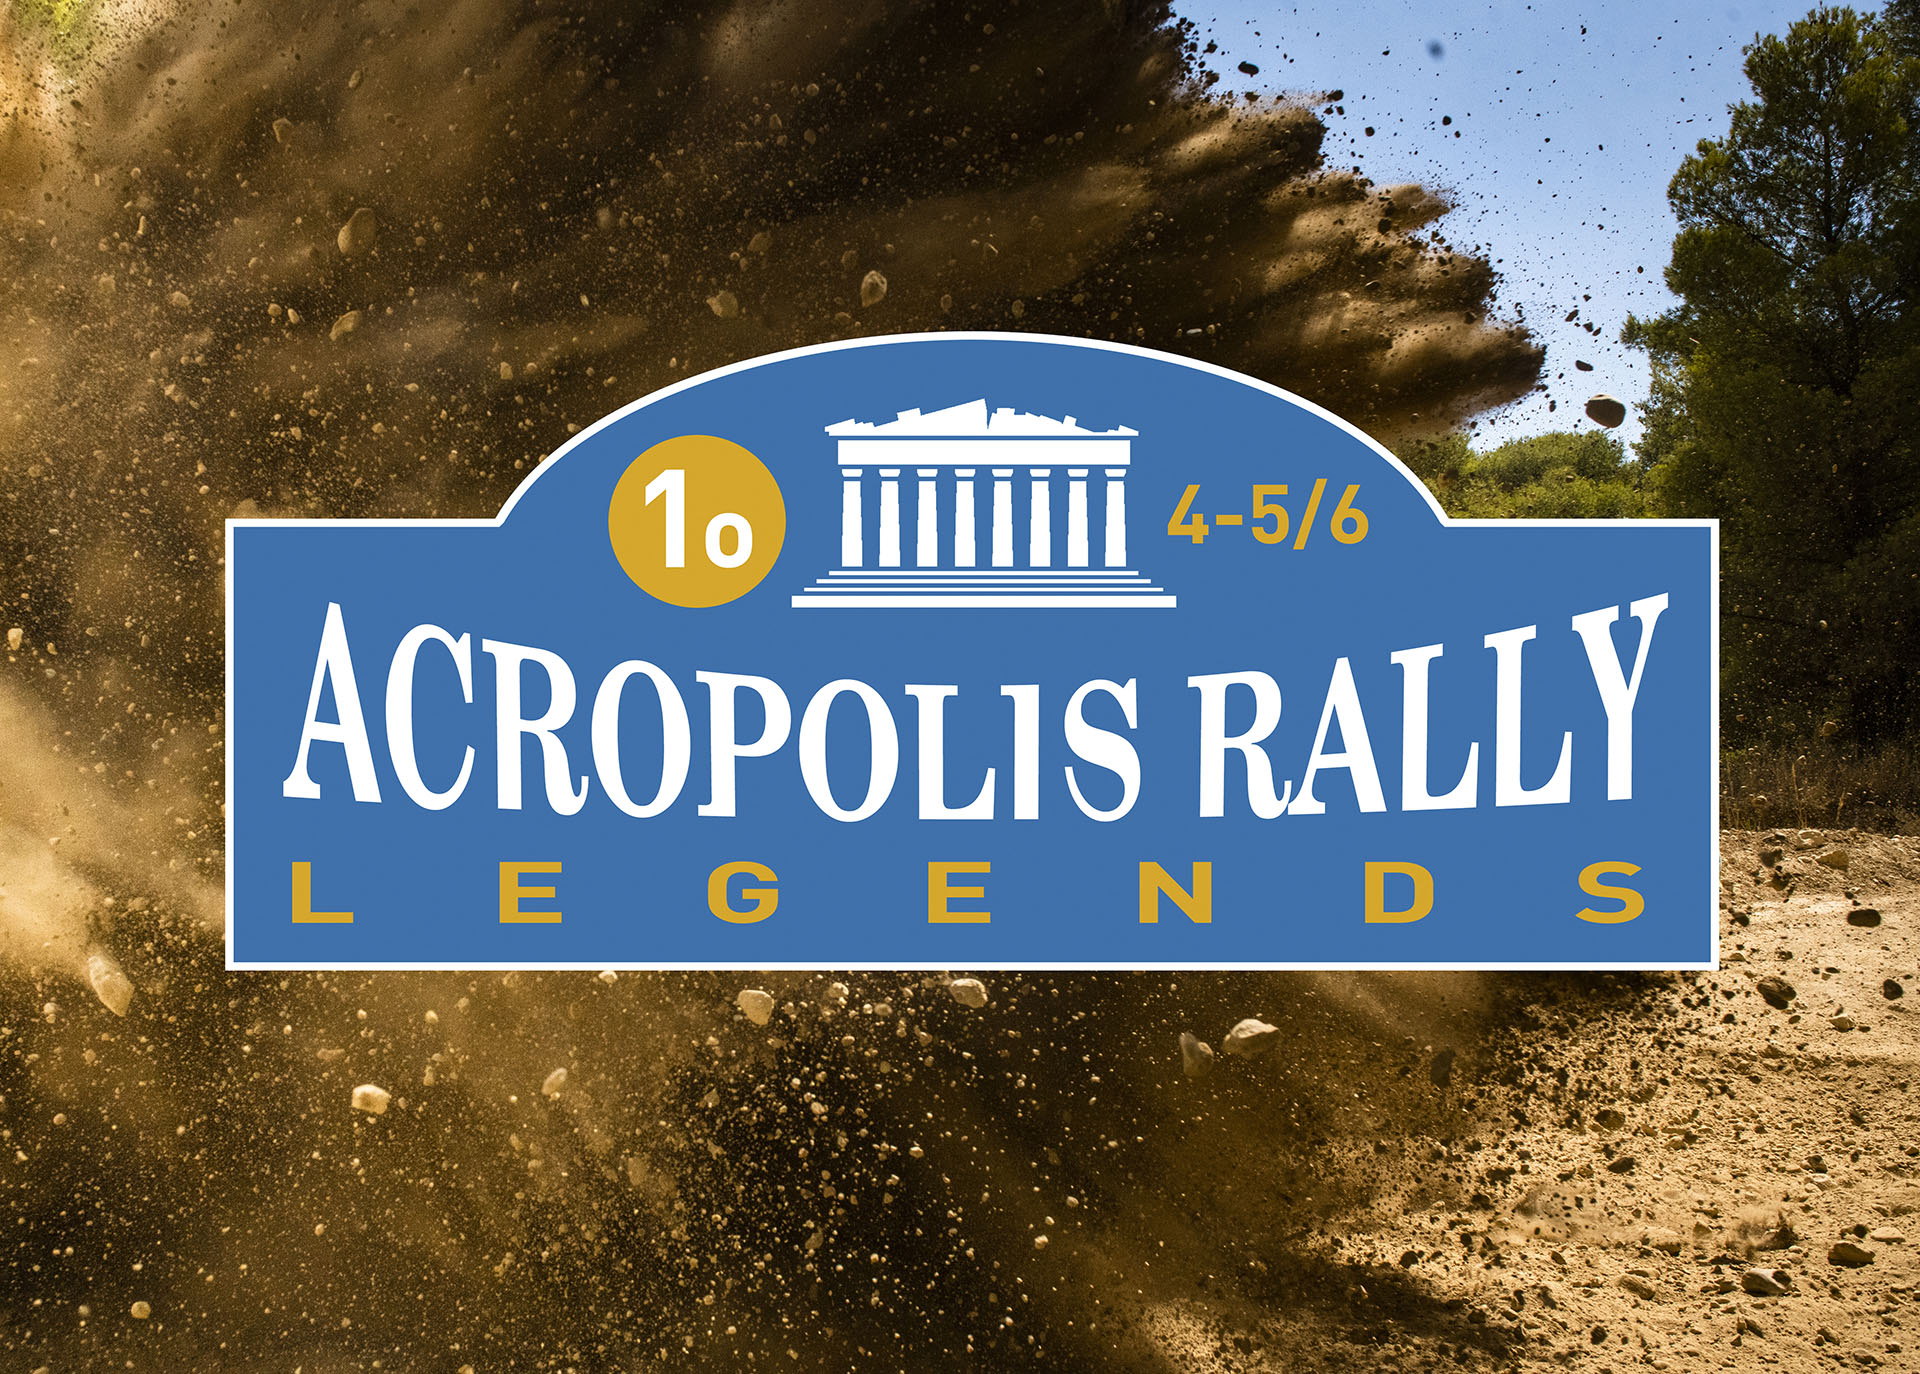 Acropolis Rally Legends